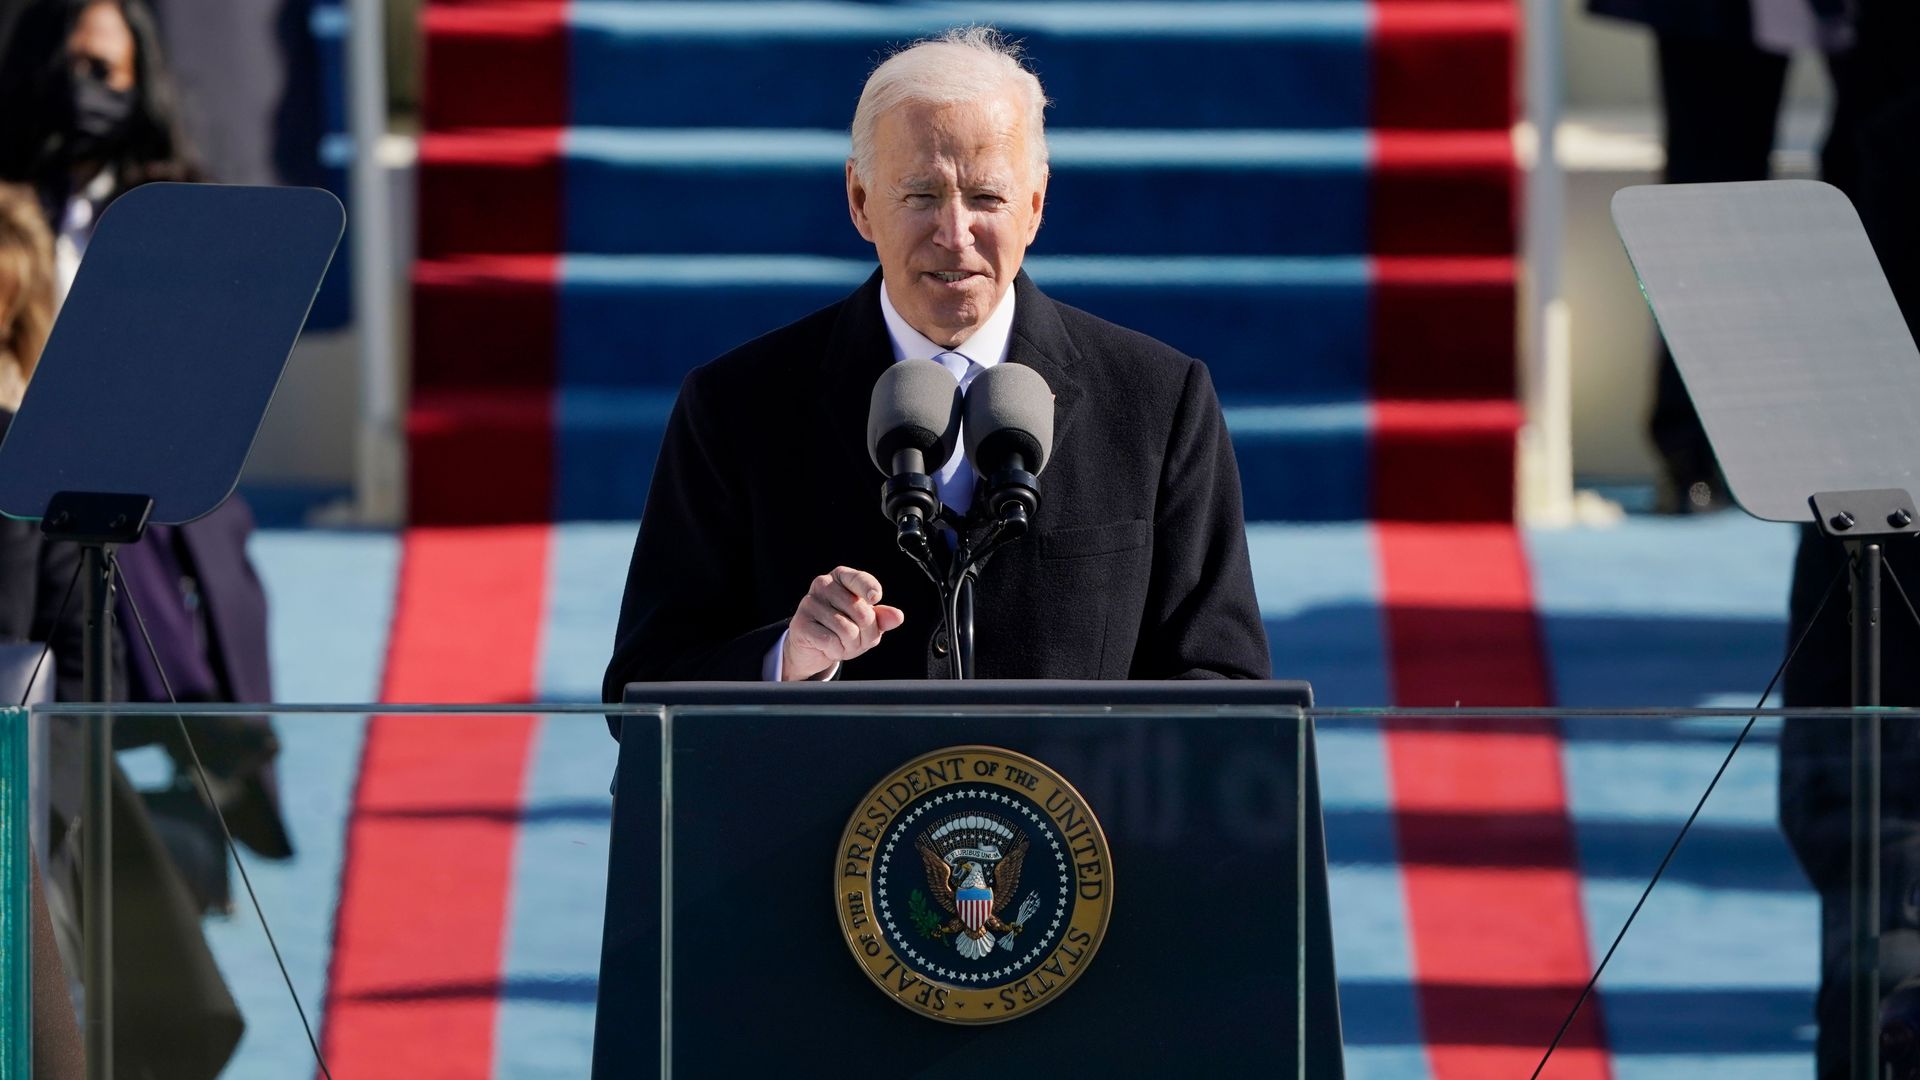 Biden at the podium